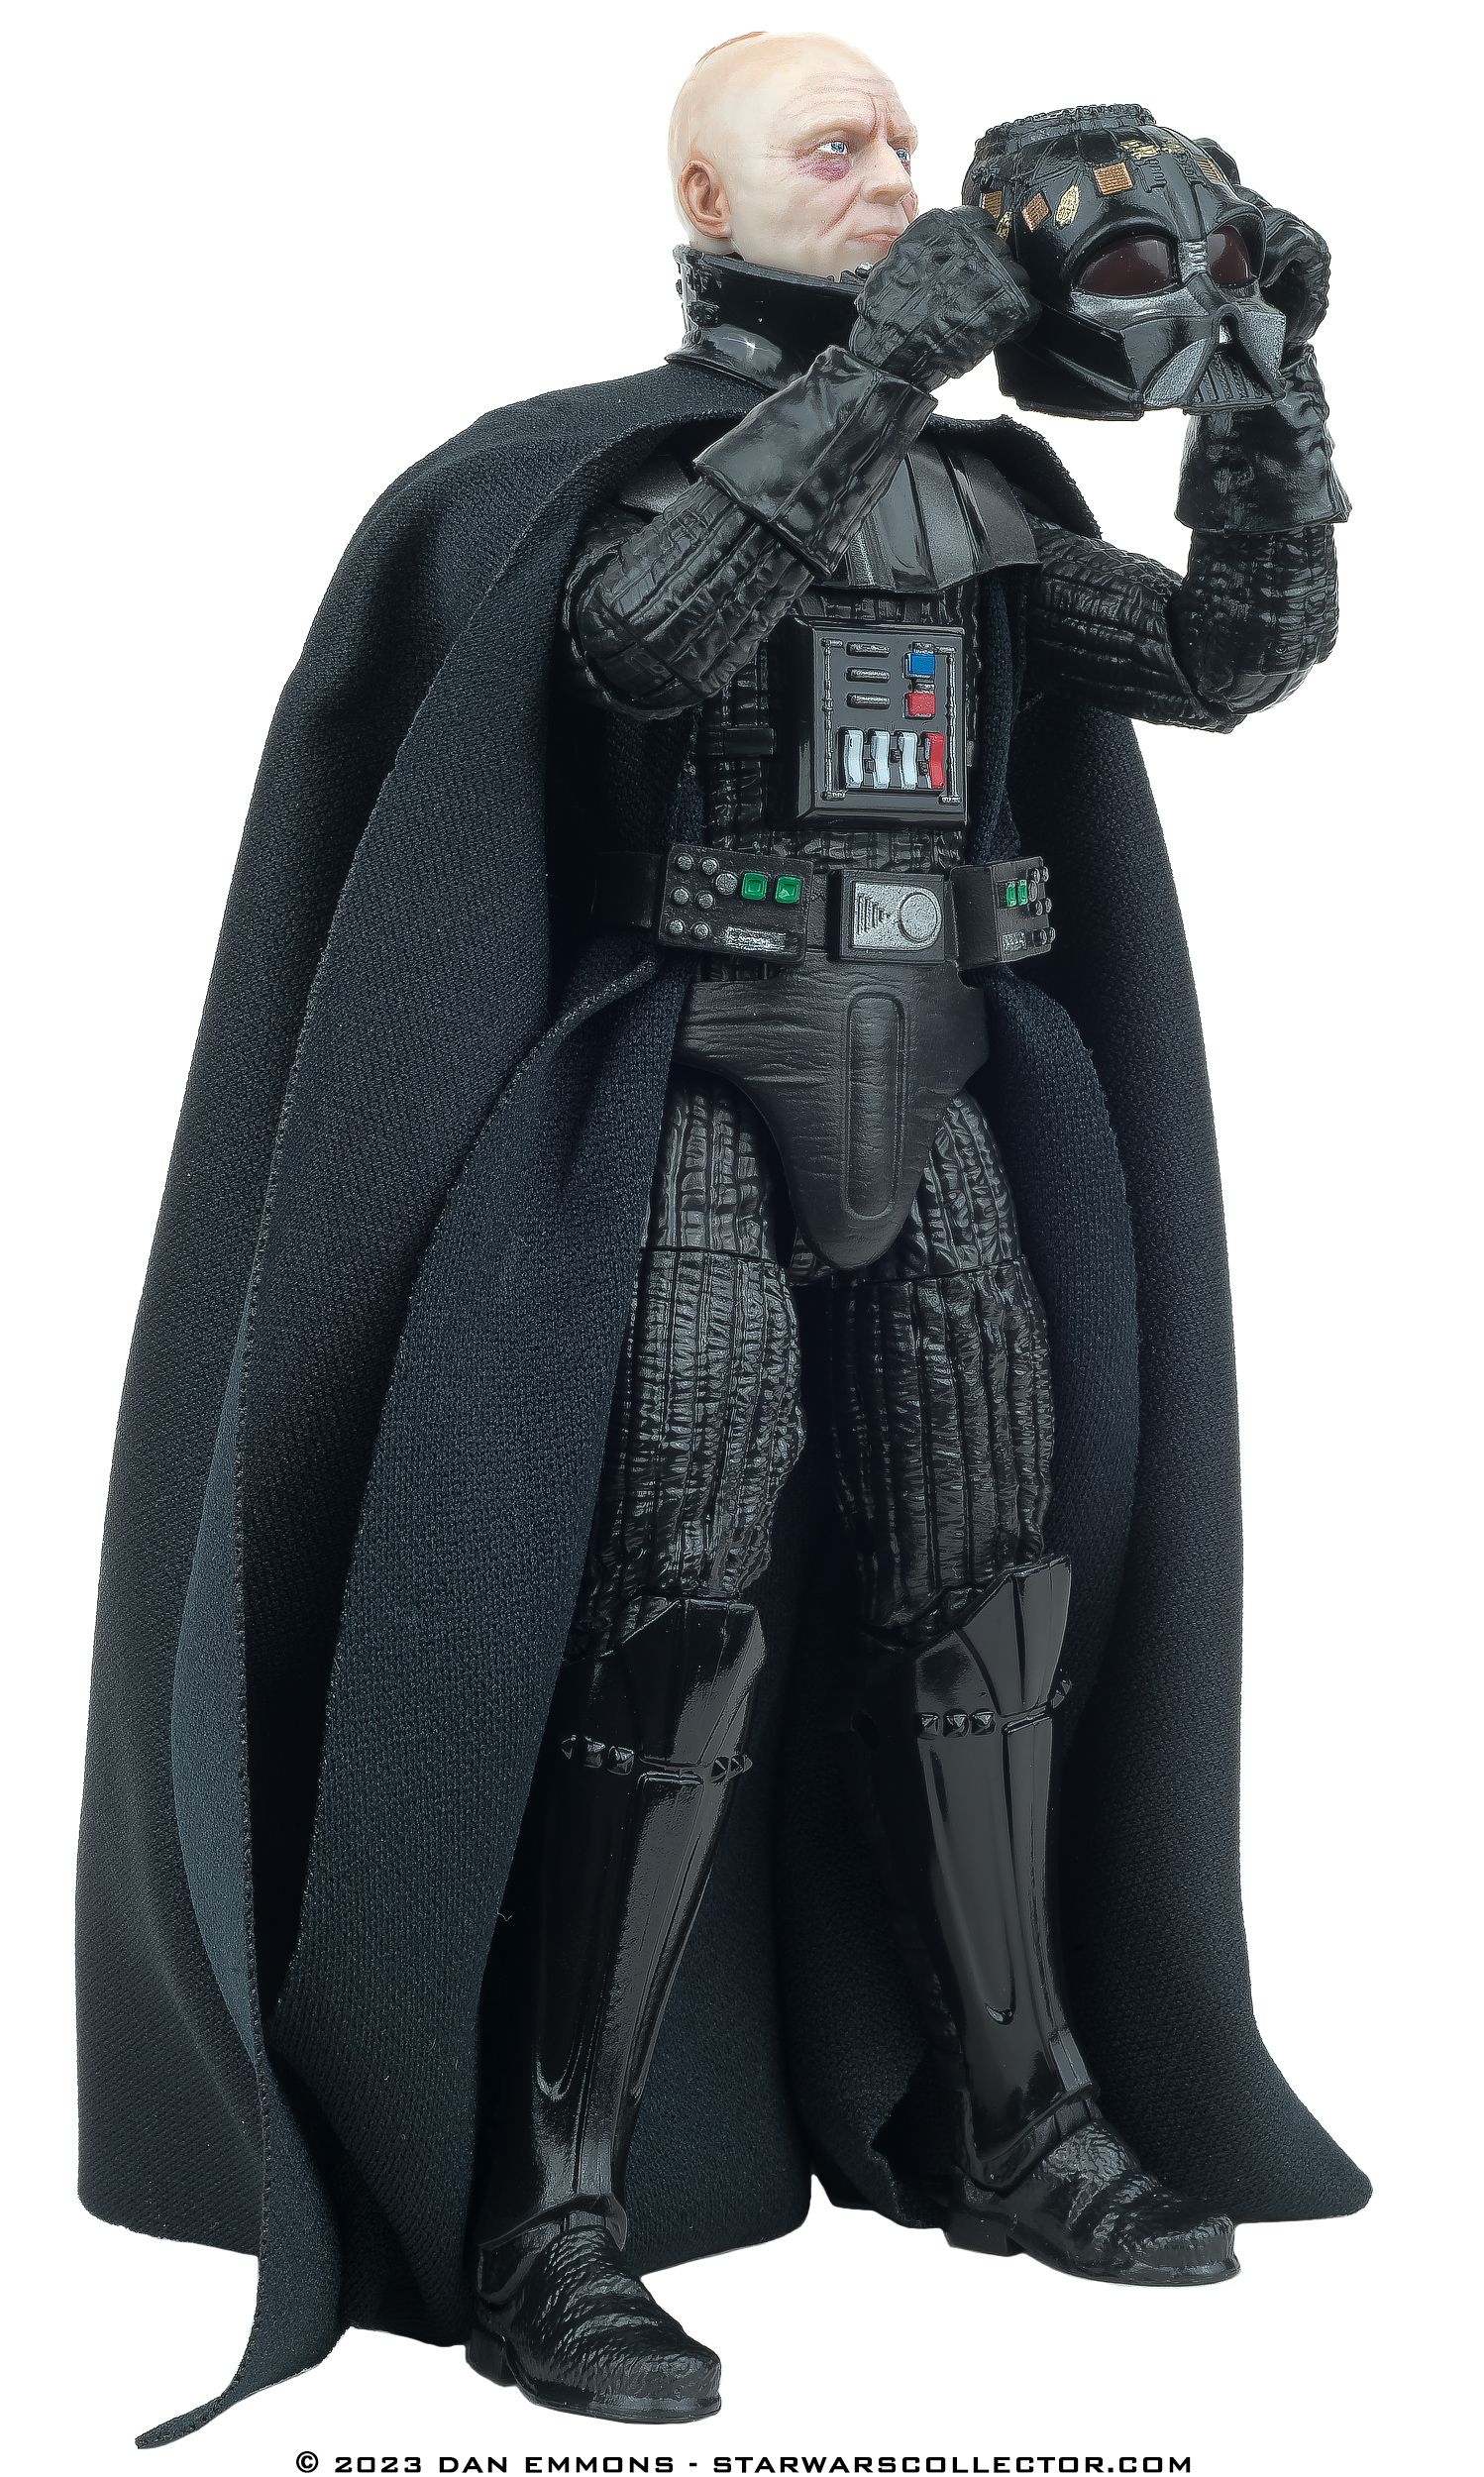 The Black Series 40th Anniversary 6-Inch Darth Vader